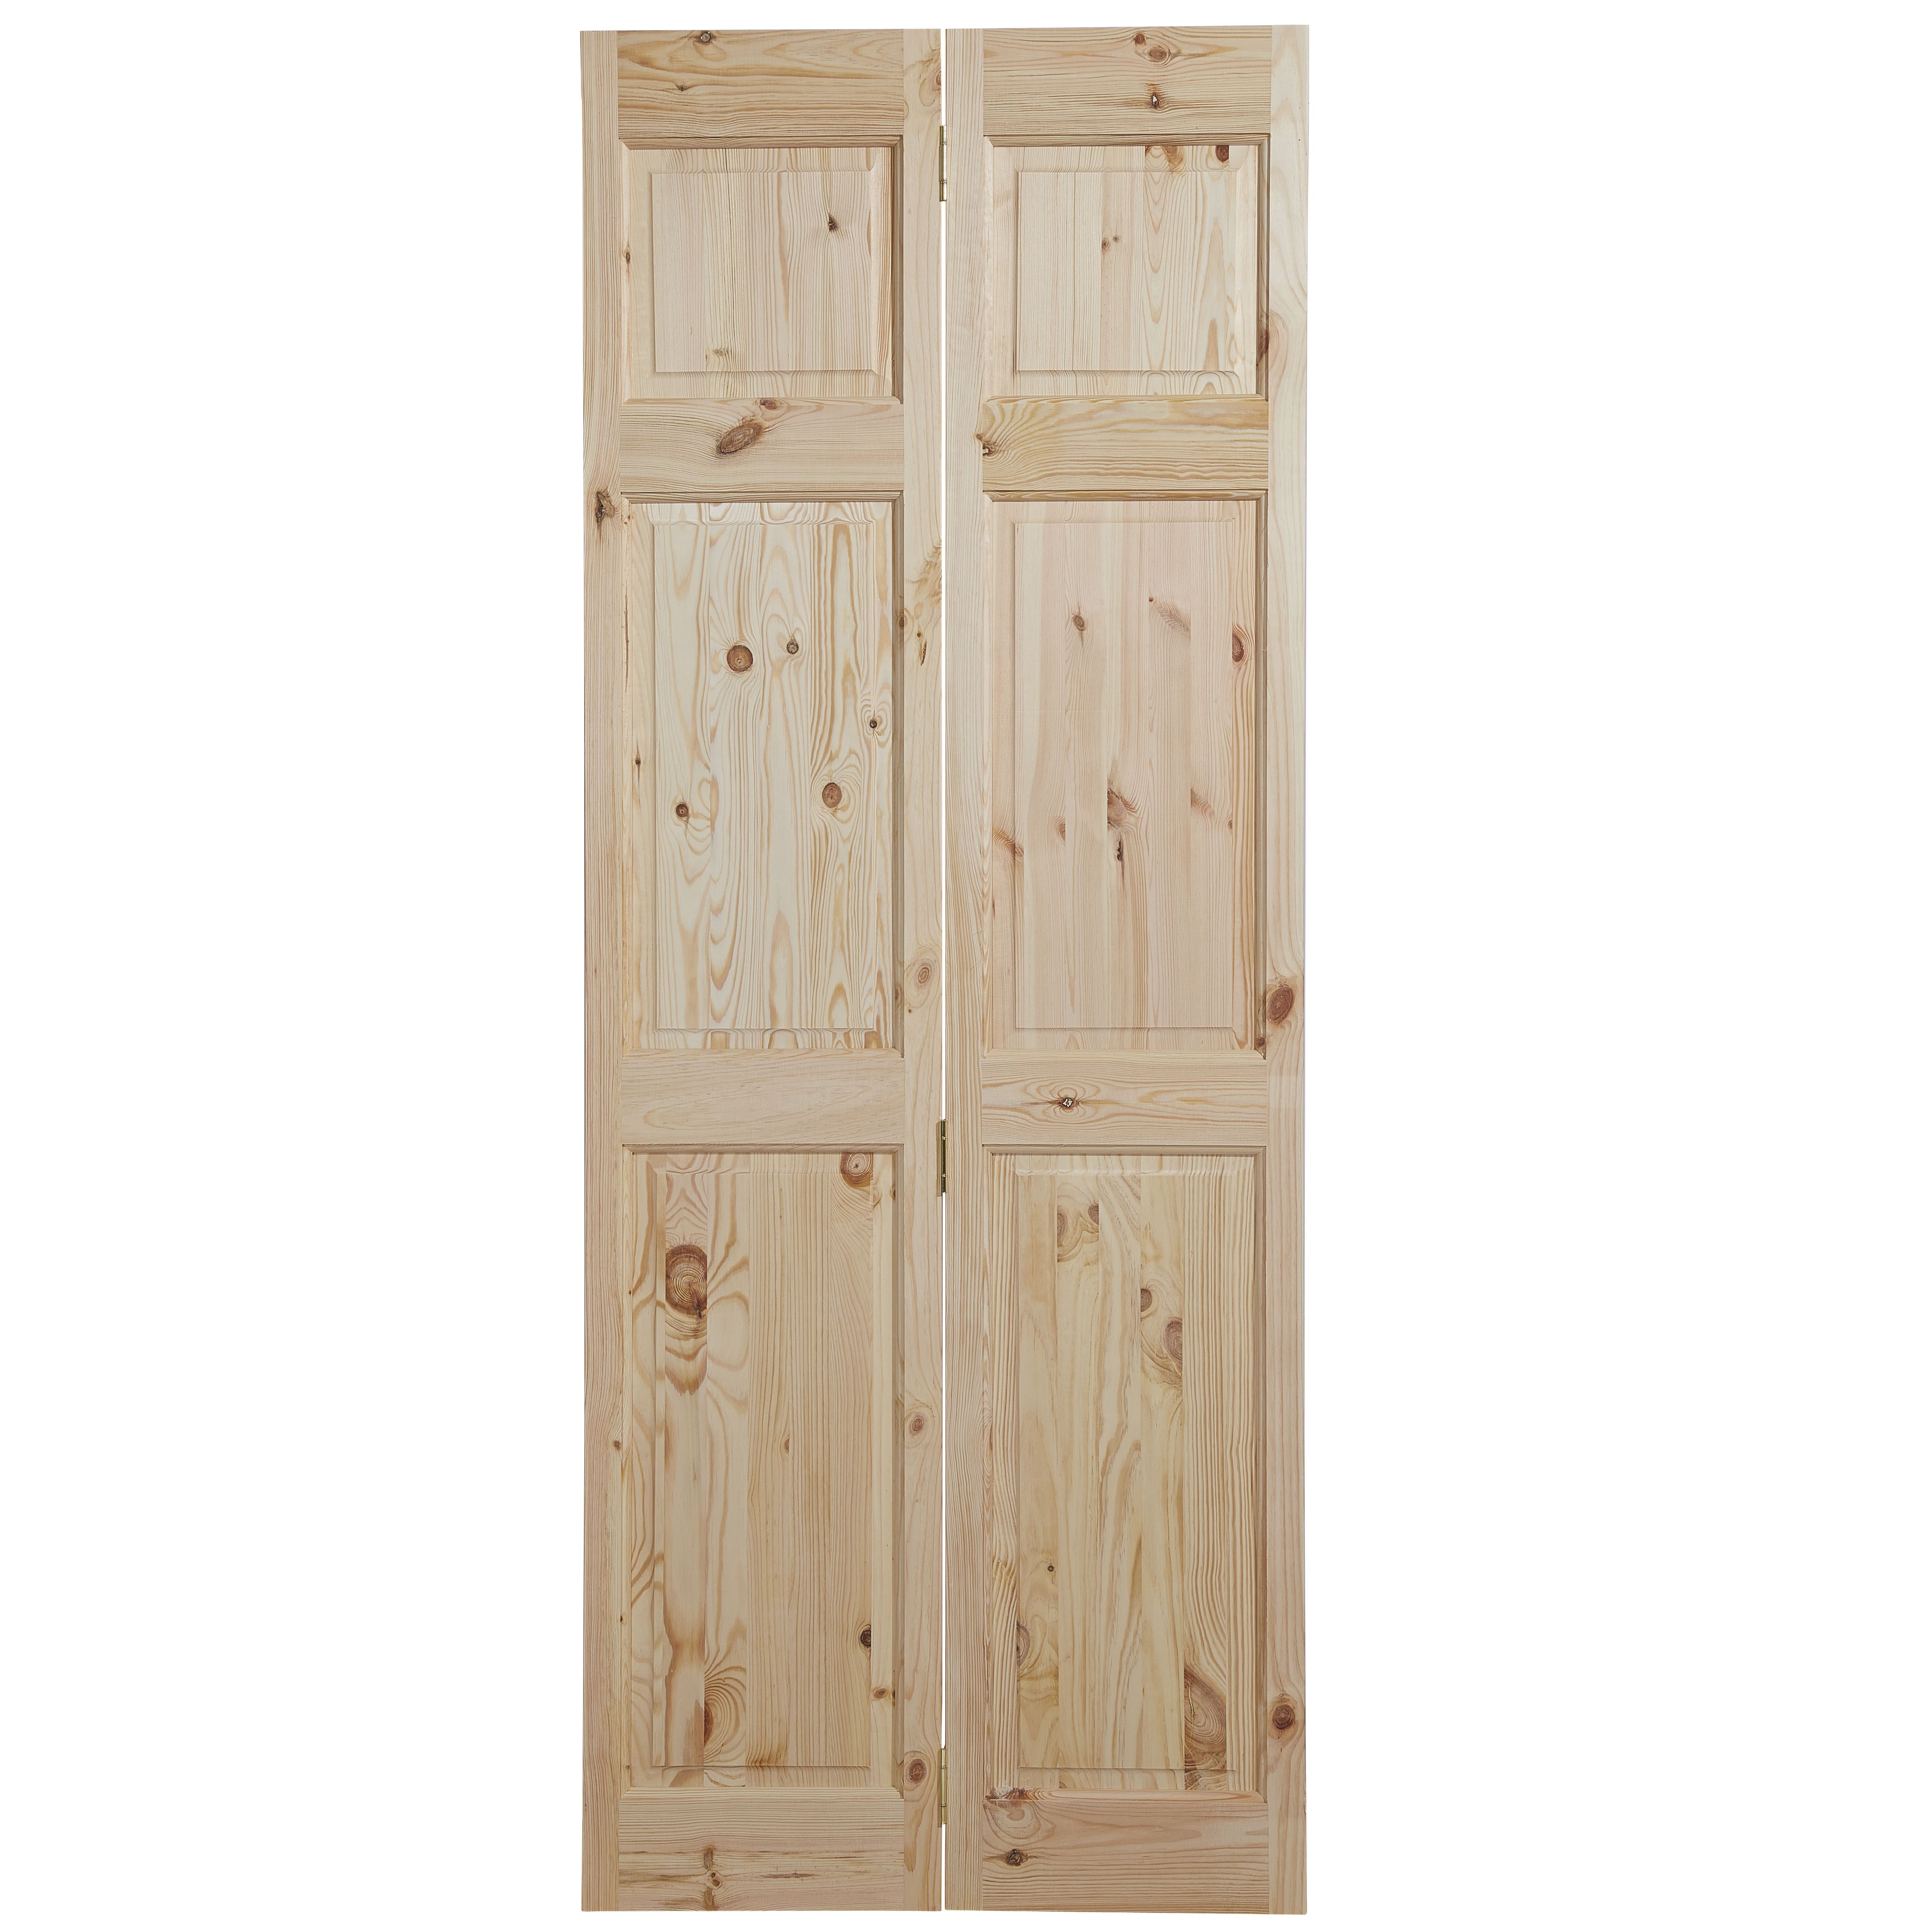 6 Panel Knotty Pine Internal Bi Fold Door Set H 1981mm W 686mm Departments Diy At B Q